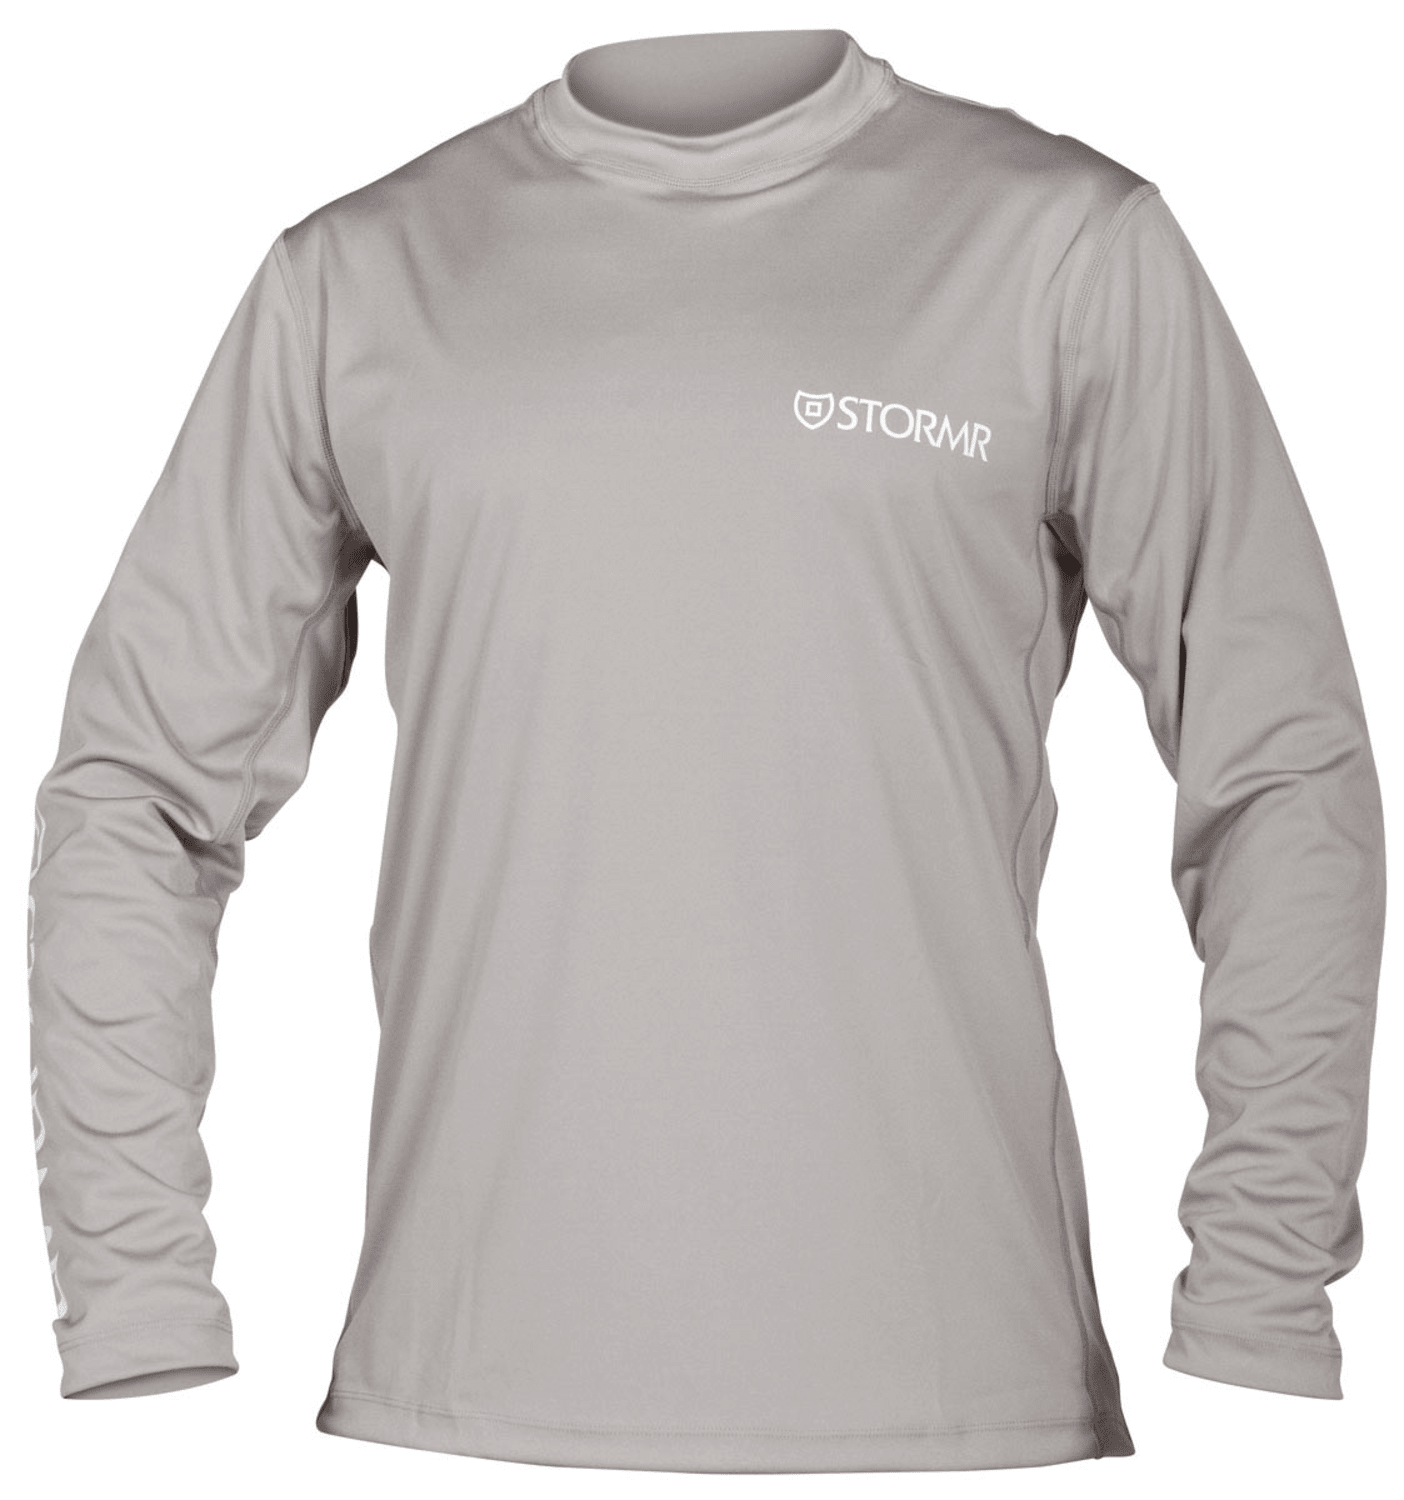 StormR UV Mesh Side Longsleeve Men's Performance Shirt, Gray, Medium